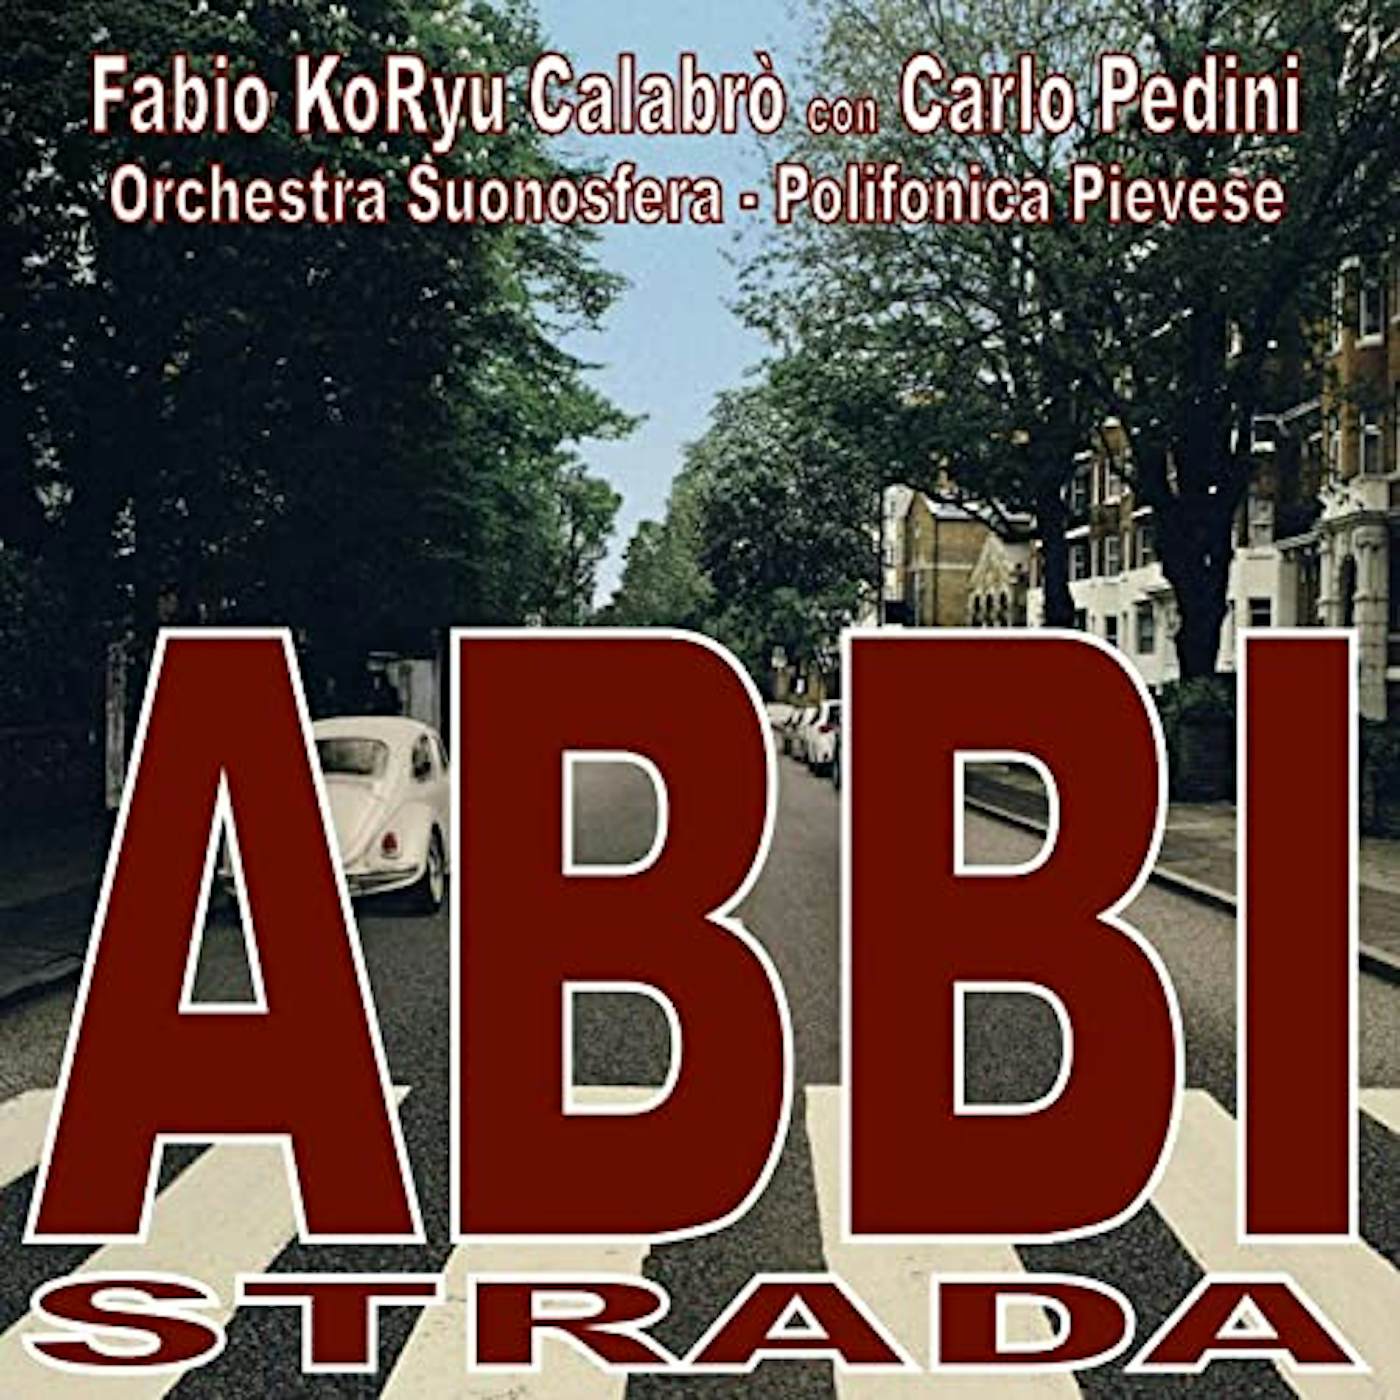 Fabio Koryu Calabro / Carlo Pedini ABBI STRADA Vinyl Record